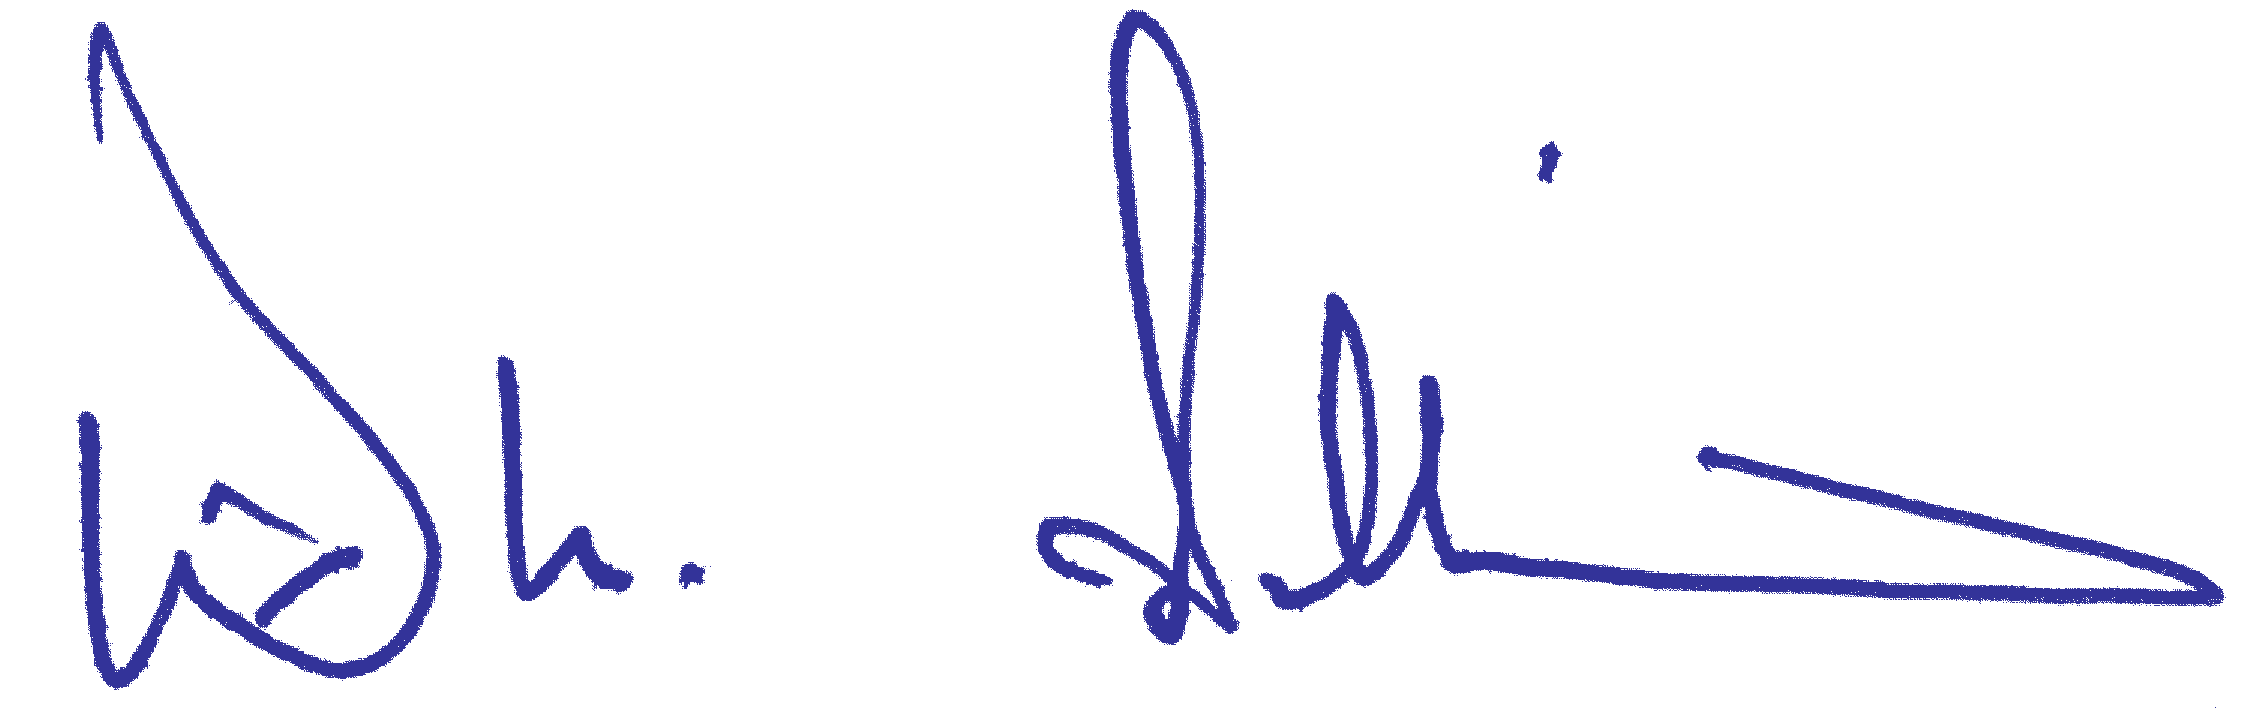 Hilenbrand signature